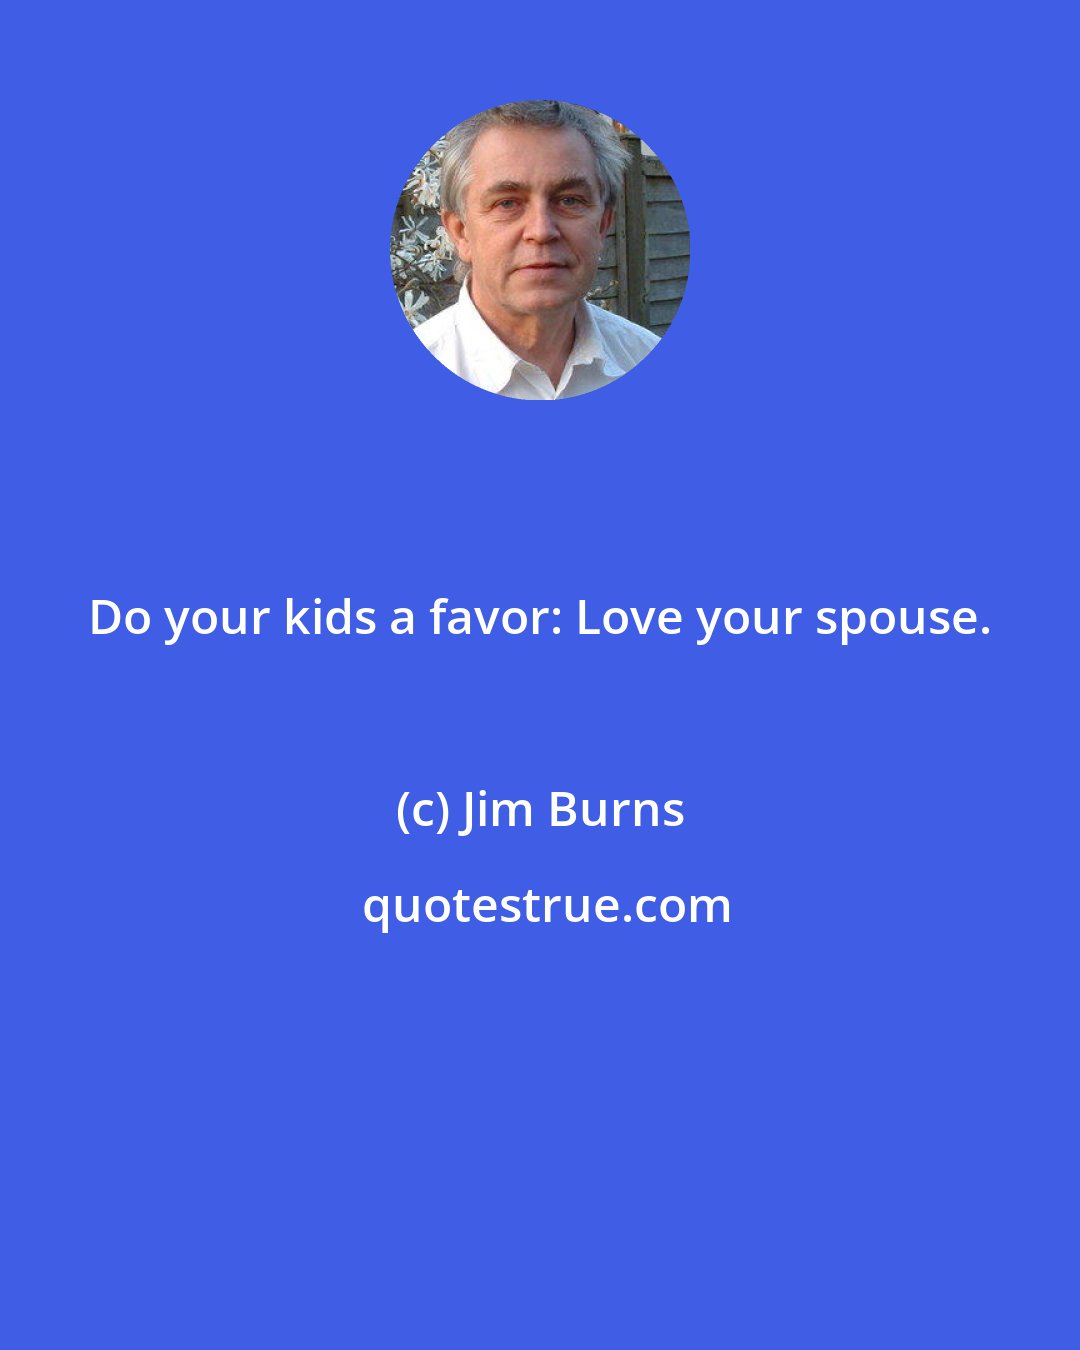 Jim Burns: Do your kids a favor: Love your spouse.